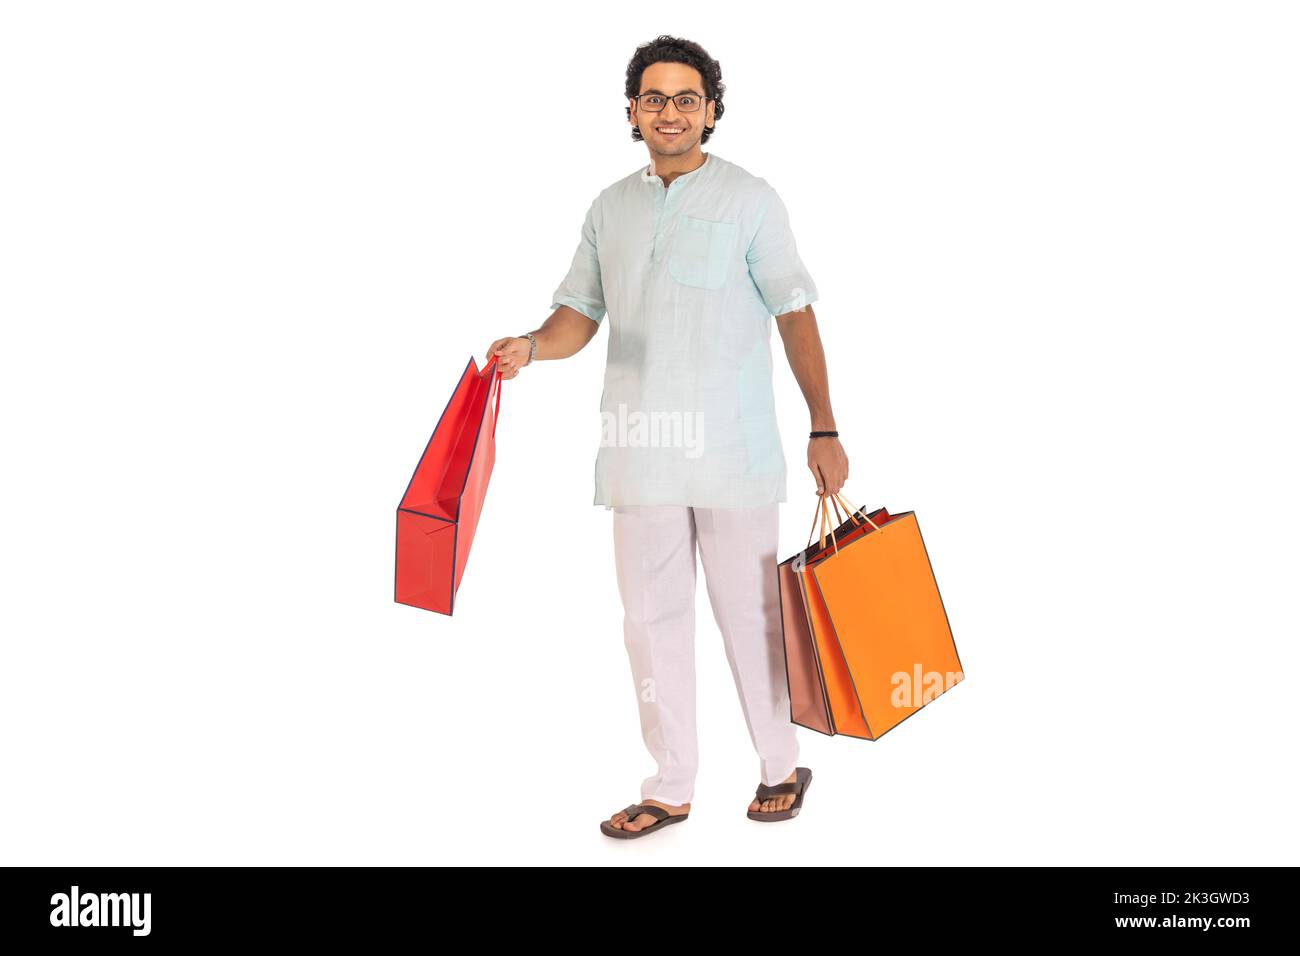 Retrato de un hombre bengalí que llevaba bolsas de compras sobre fondo blanco Foto de stock